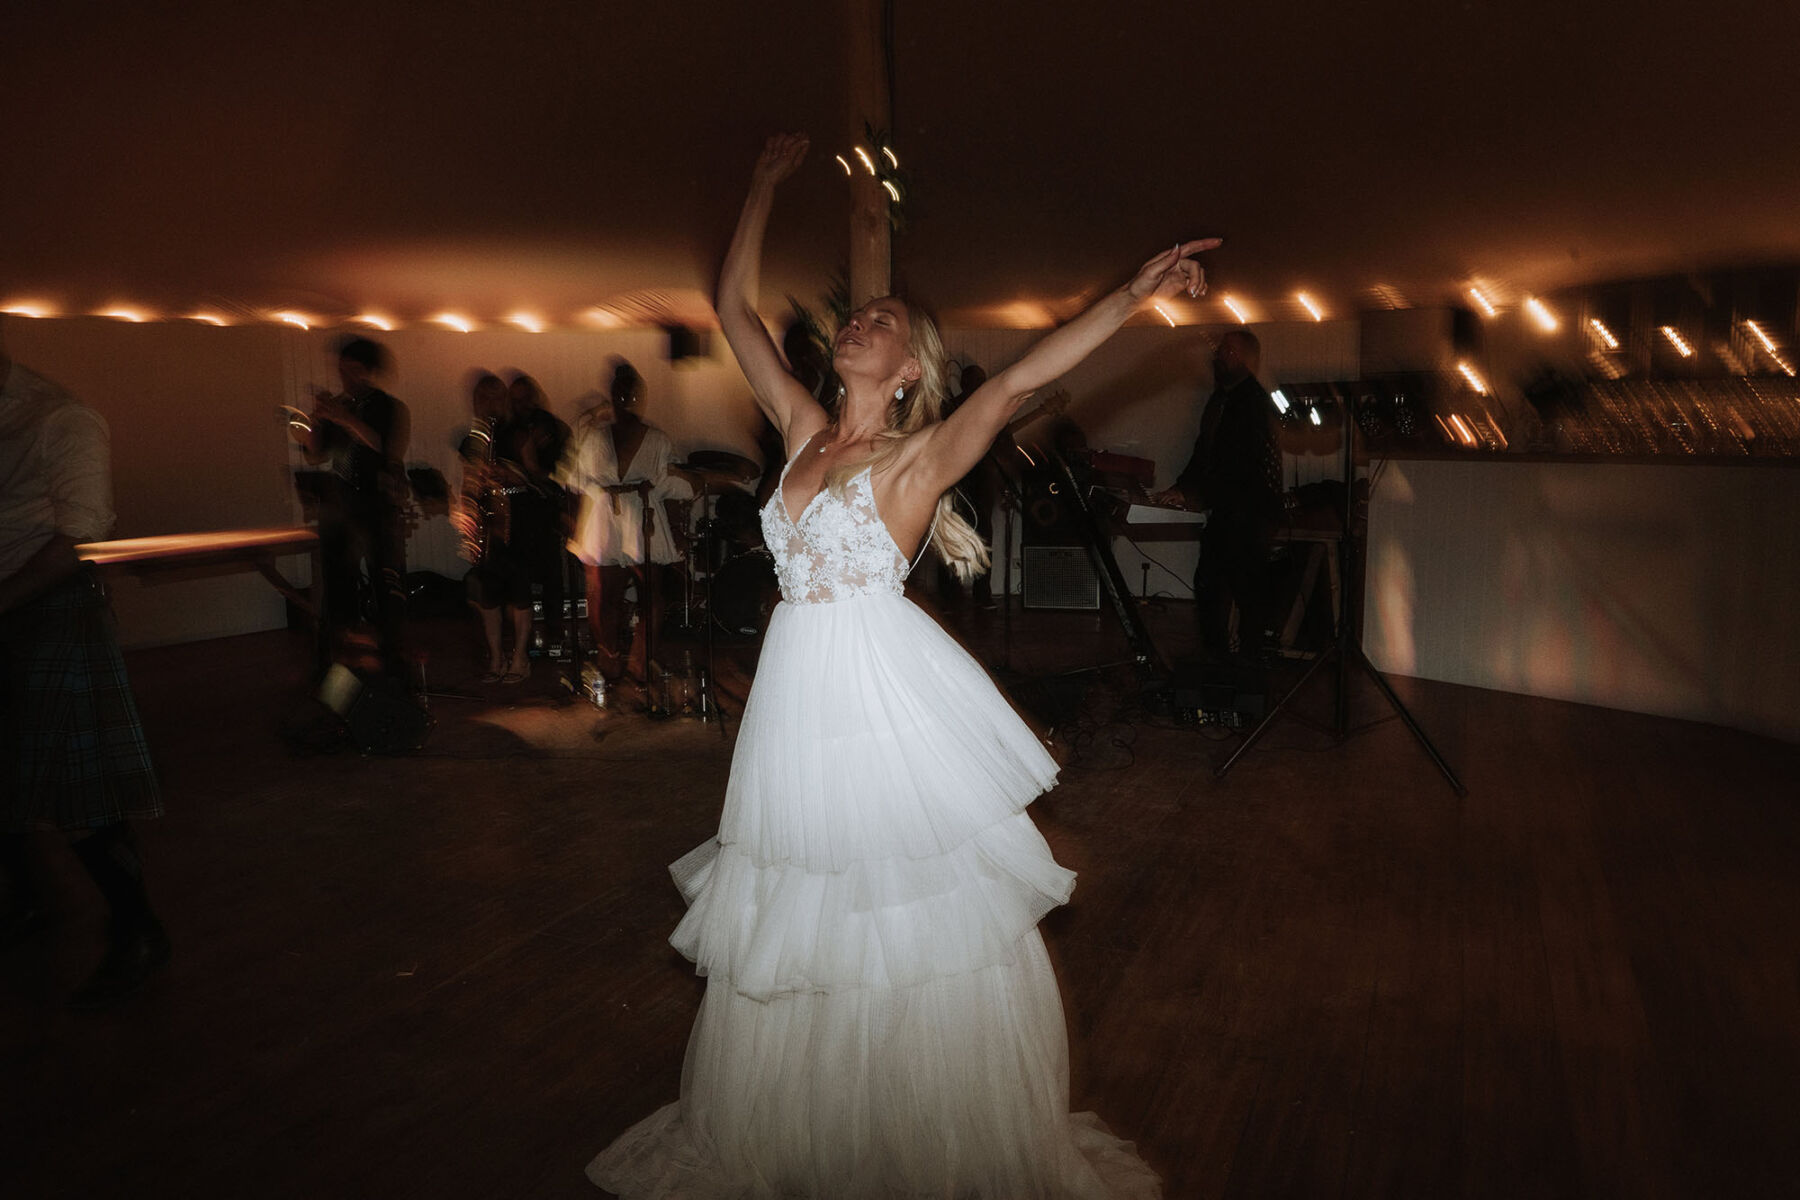 Kindling Bridal wedding dress - bride letting go on the dancefloor